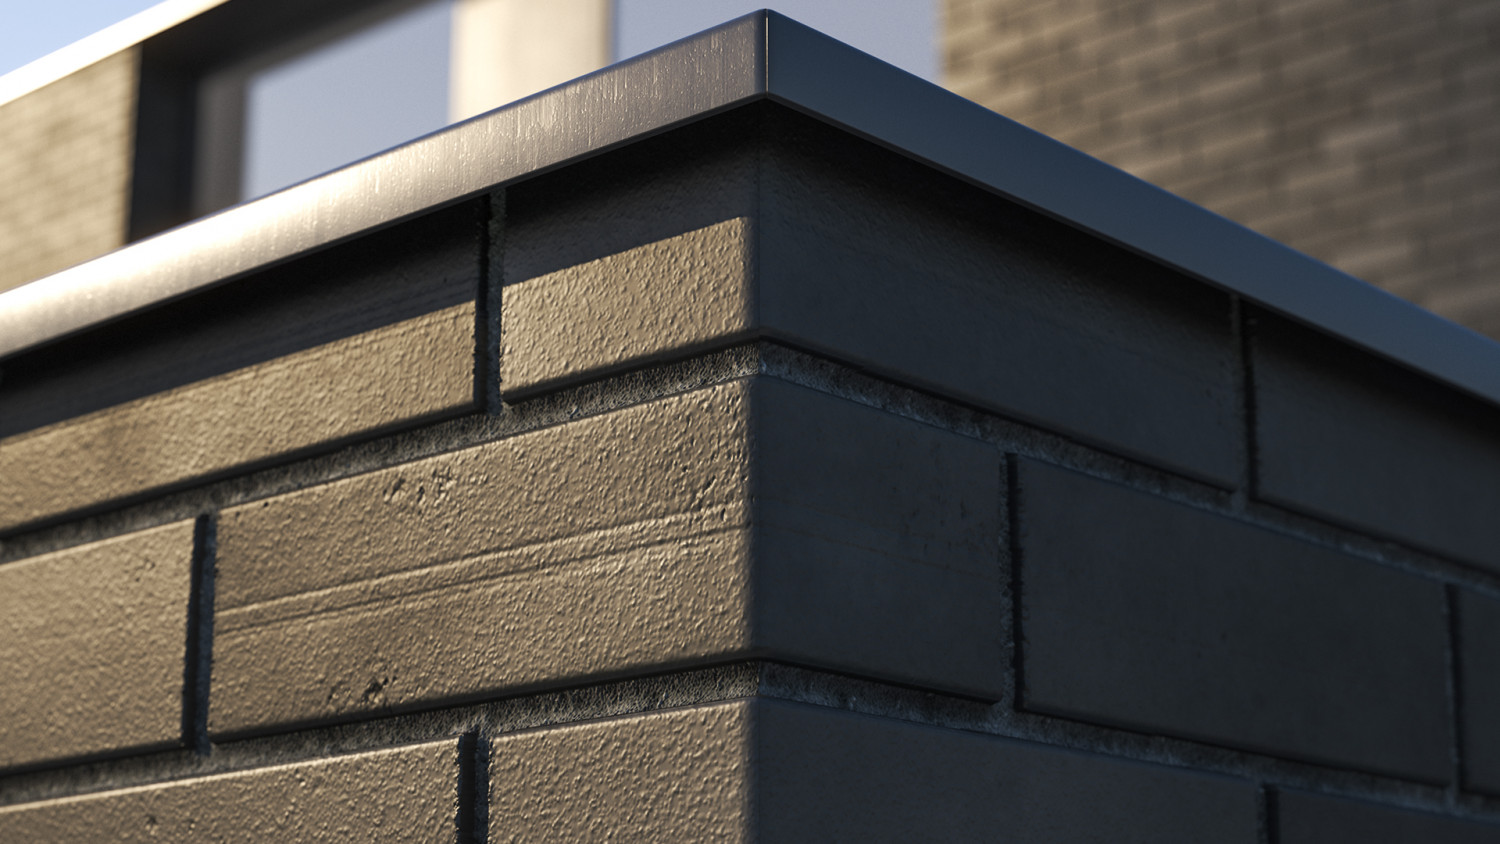 Black clinker brick texture